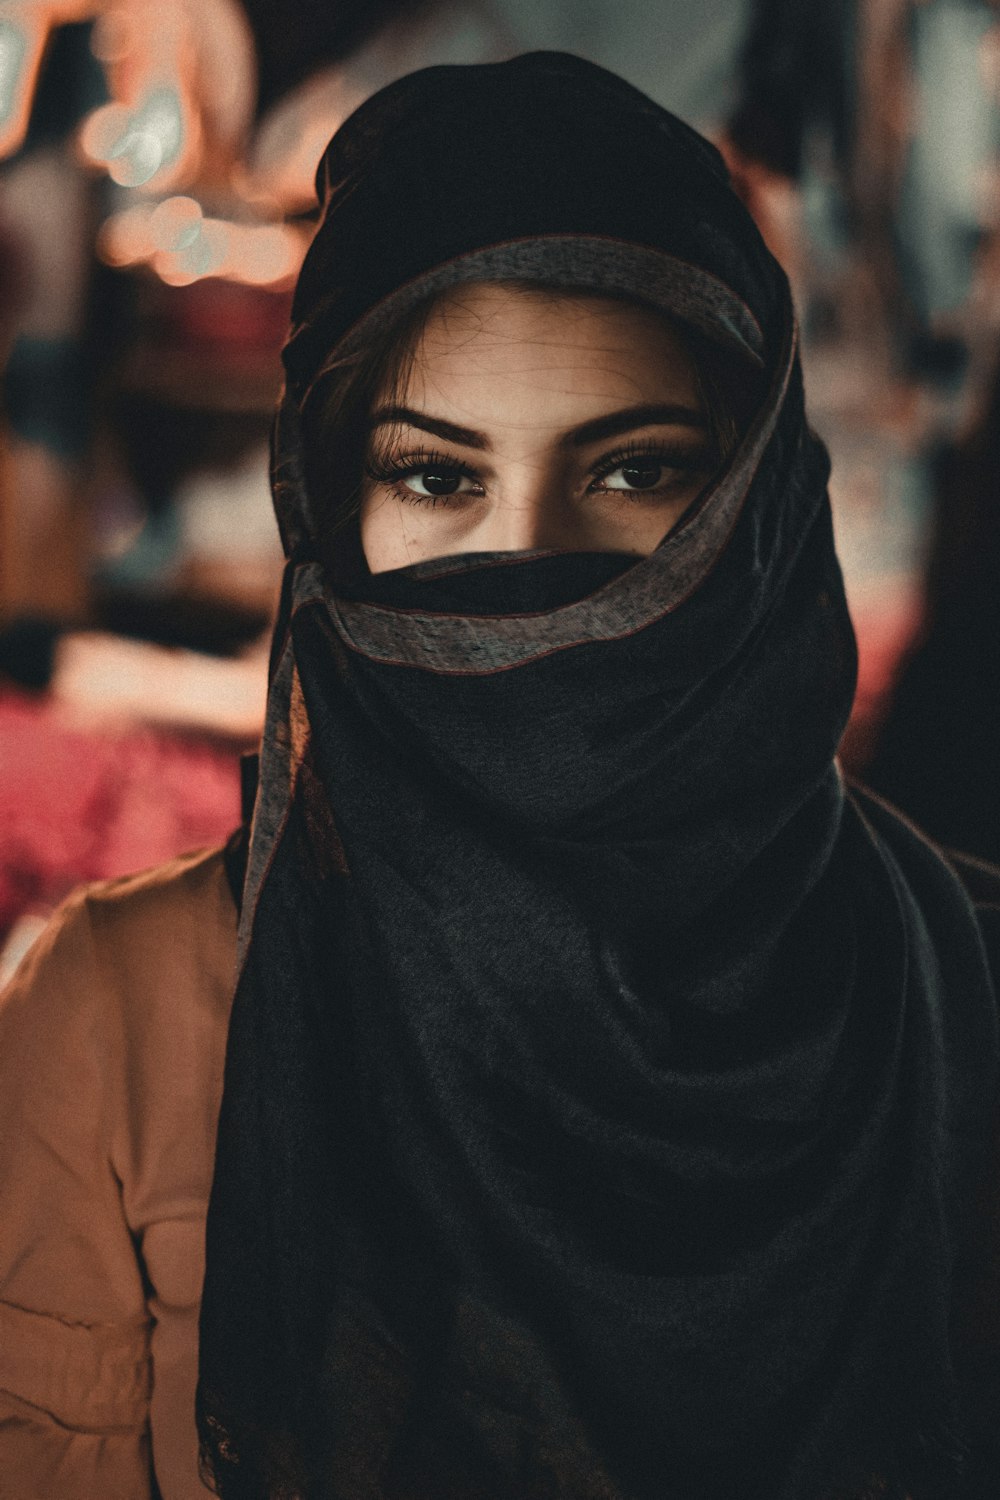 femme en hijab noir debout